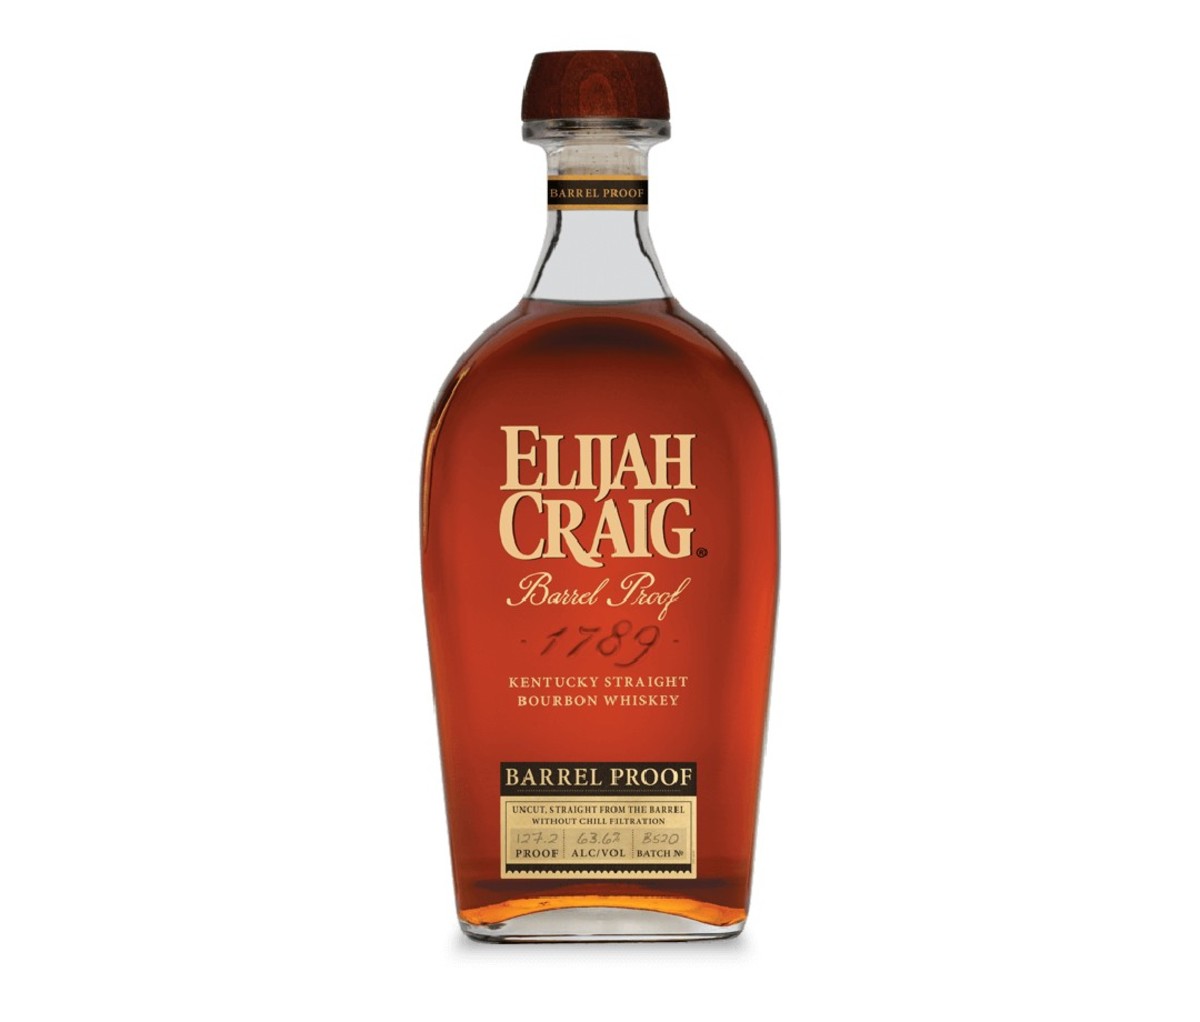 Bottle of Elijah Craig Barrel Proof